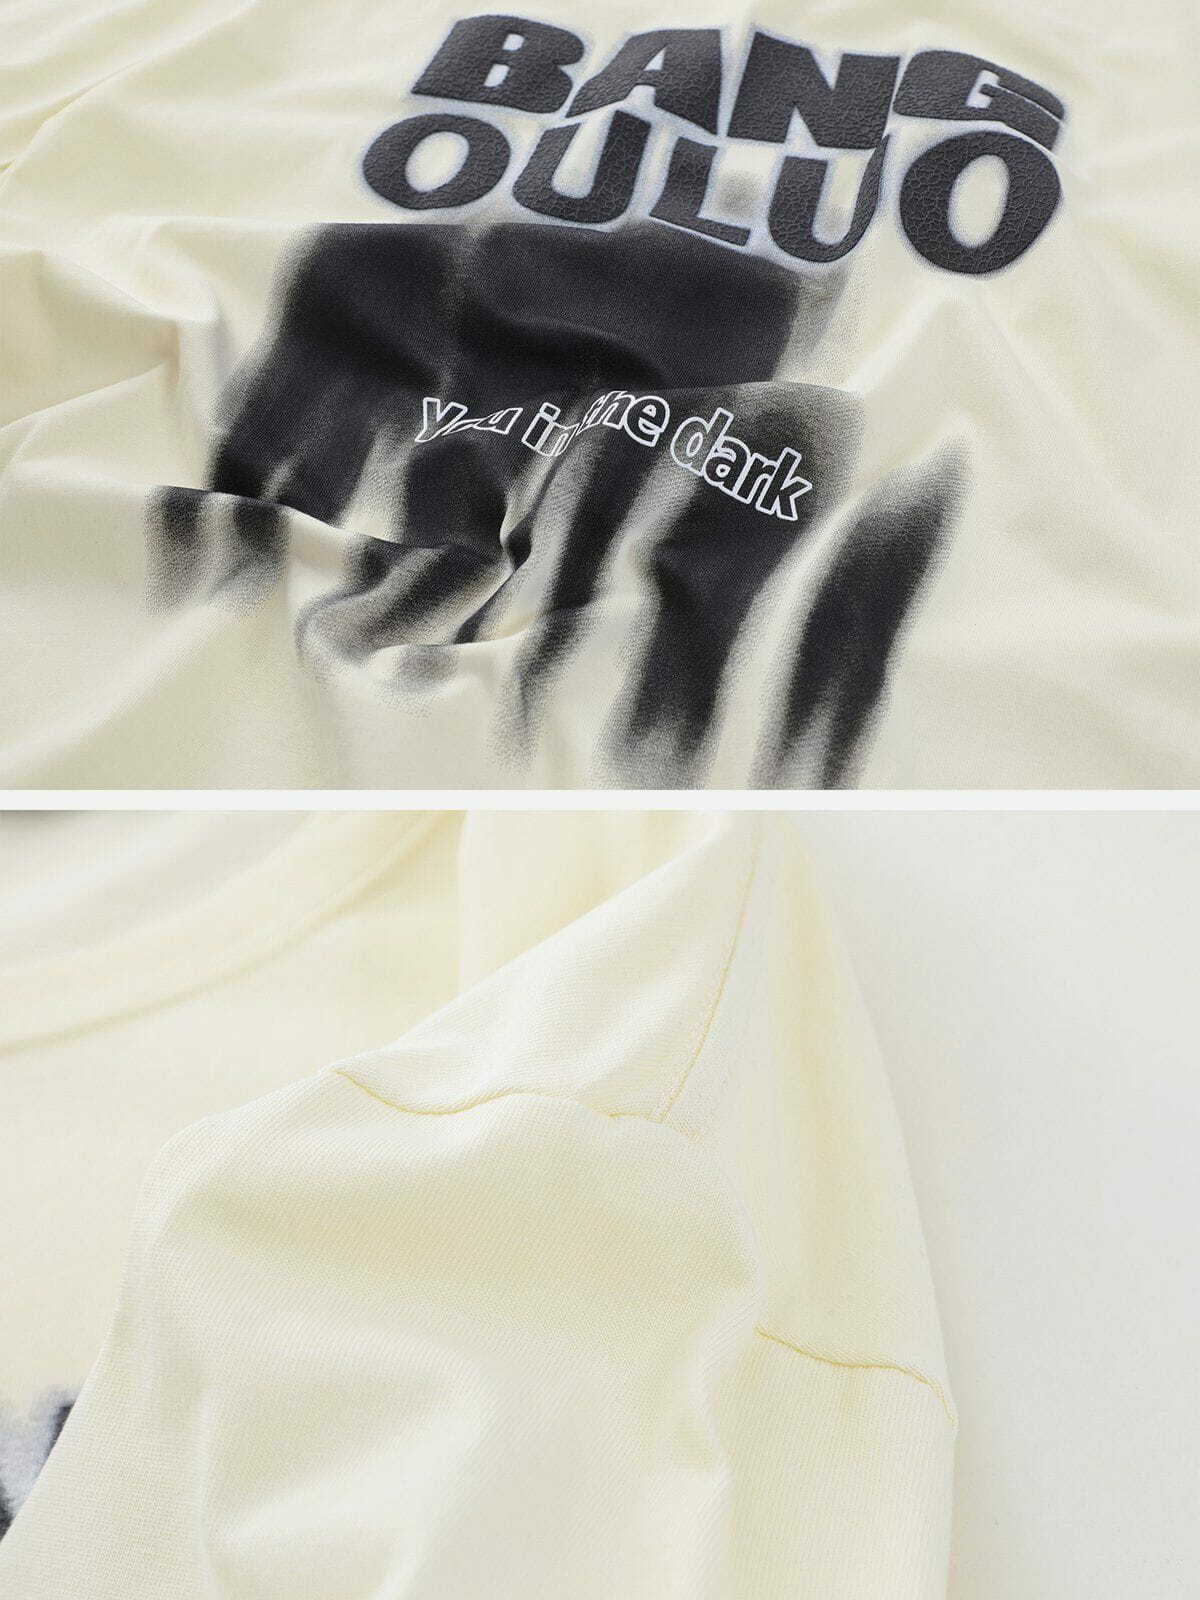 vibrant blurring design tee youthful  edgy streetwear shirt 5265